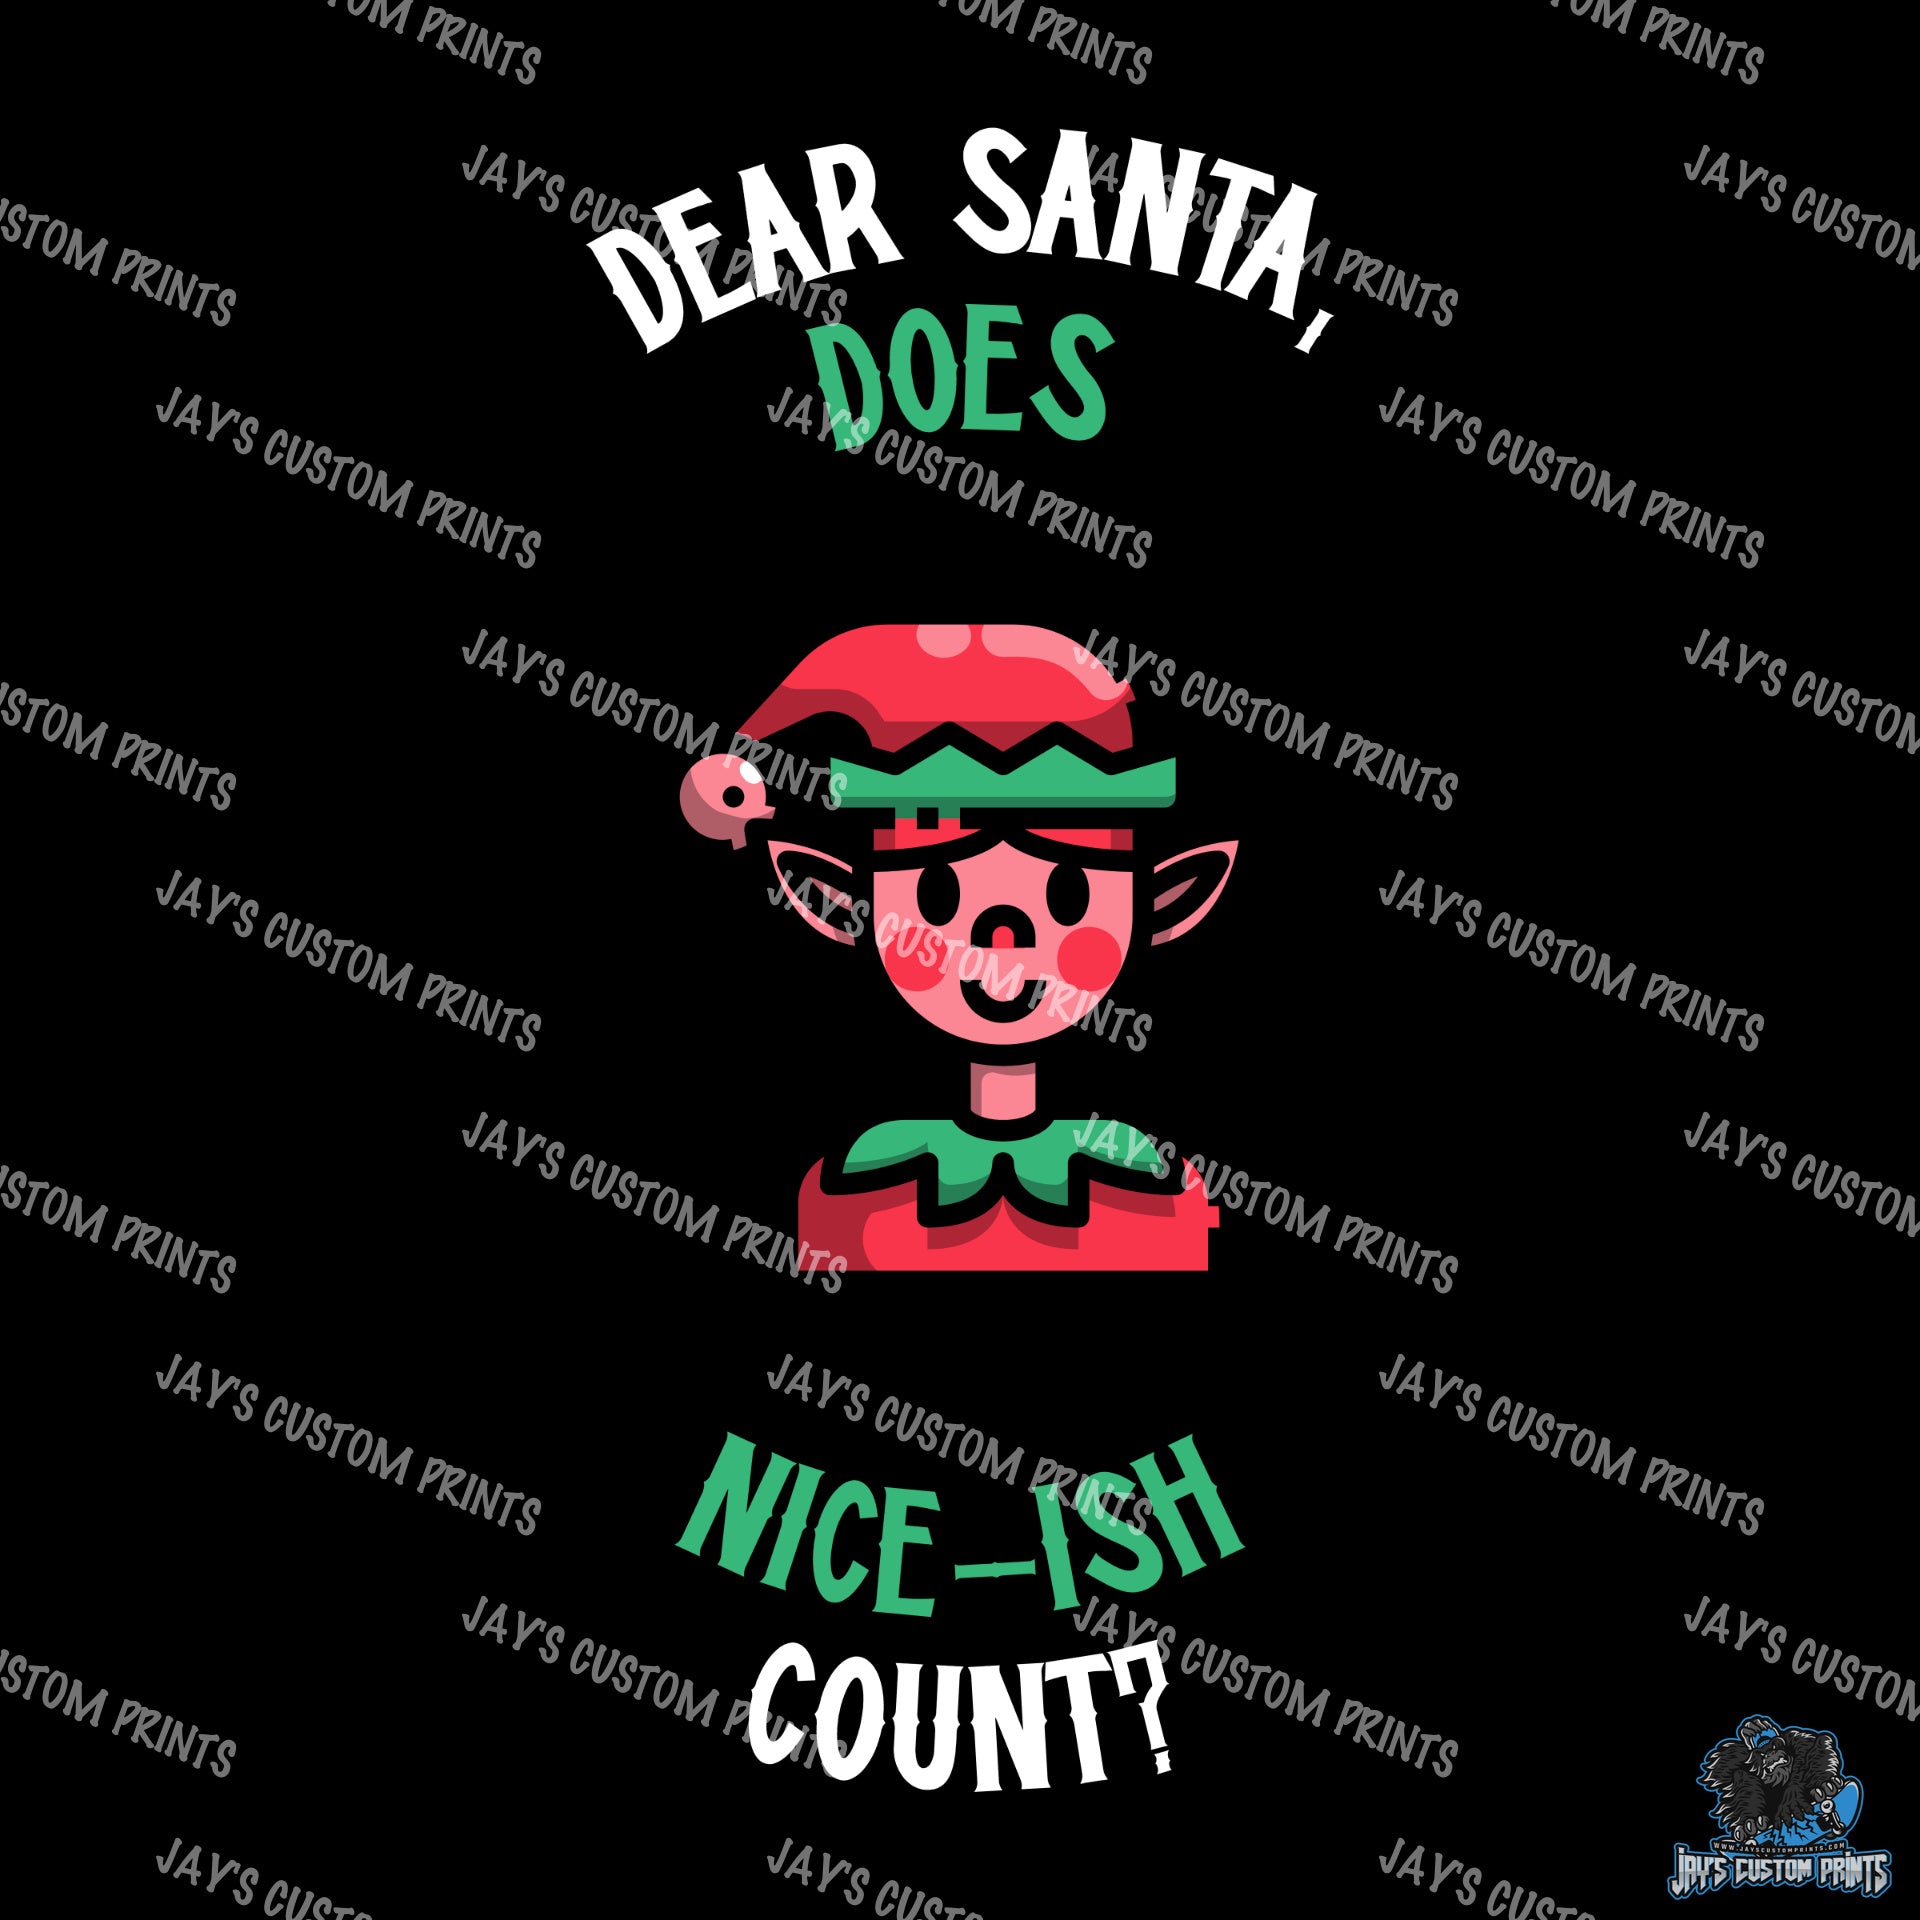 Dear Santa - Does Nice-ish Count